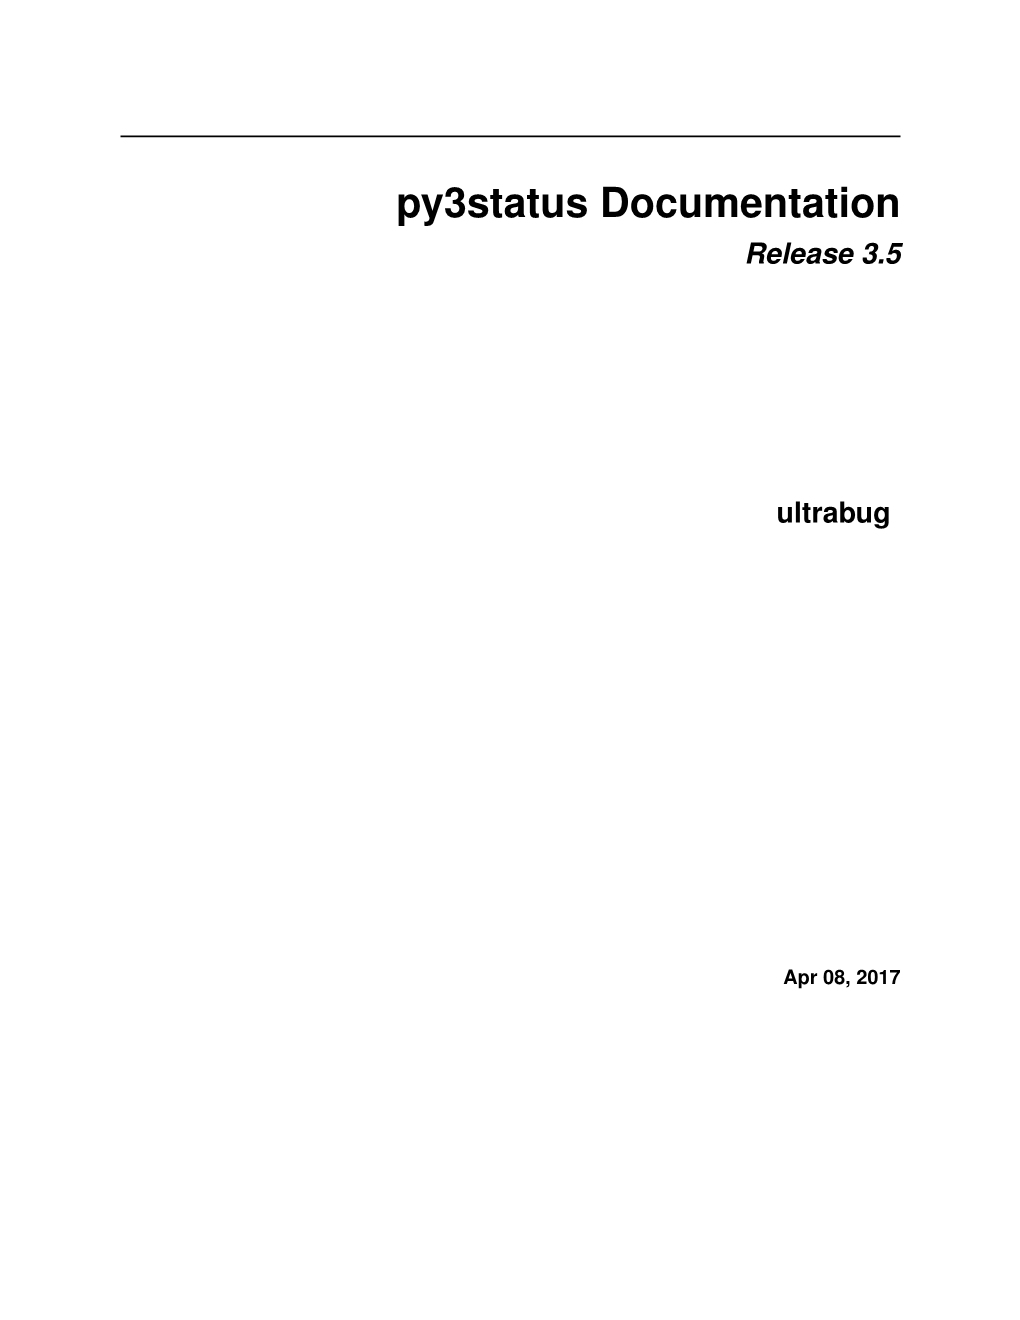 Py3status Documentation Release 3.5